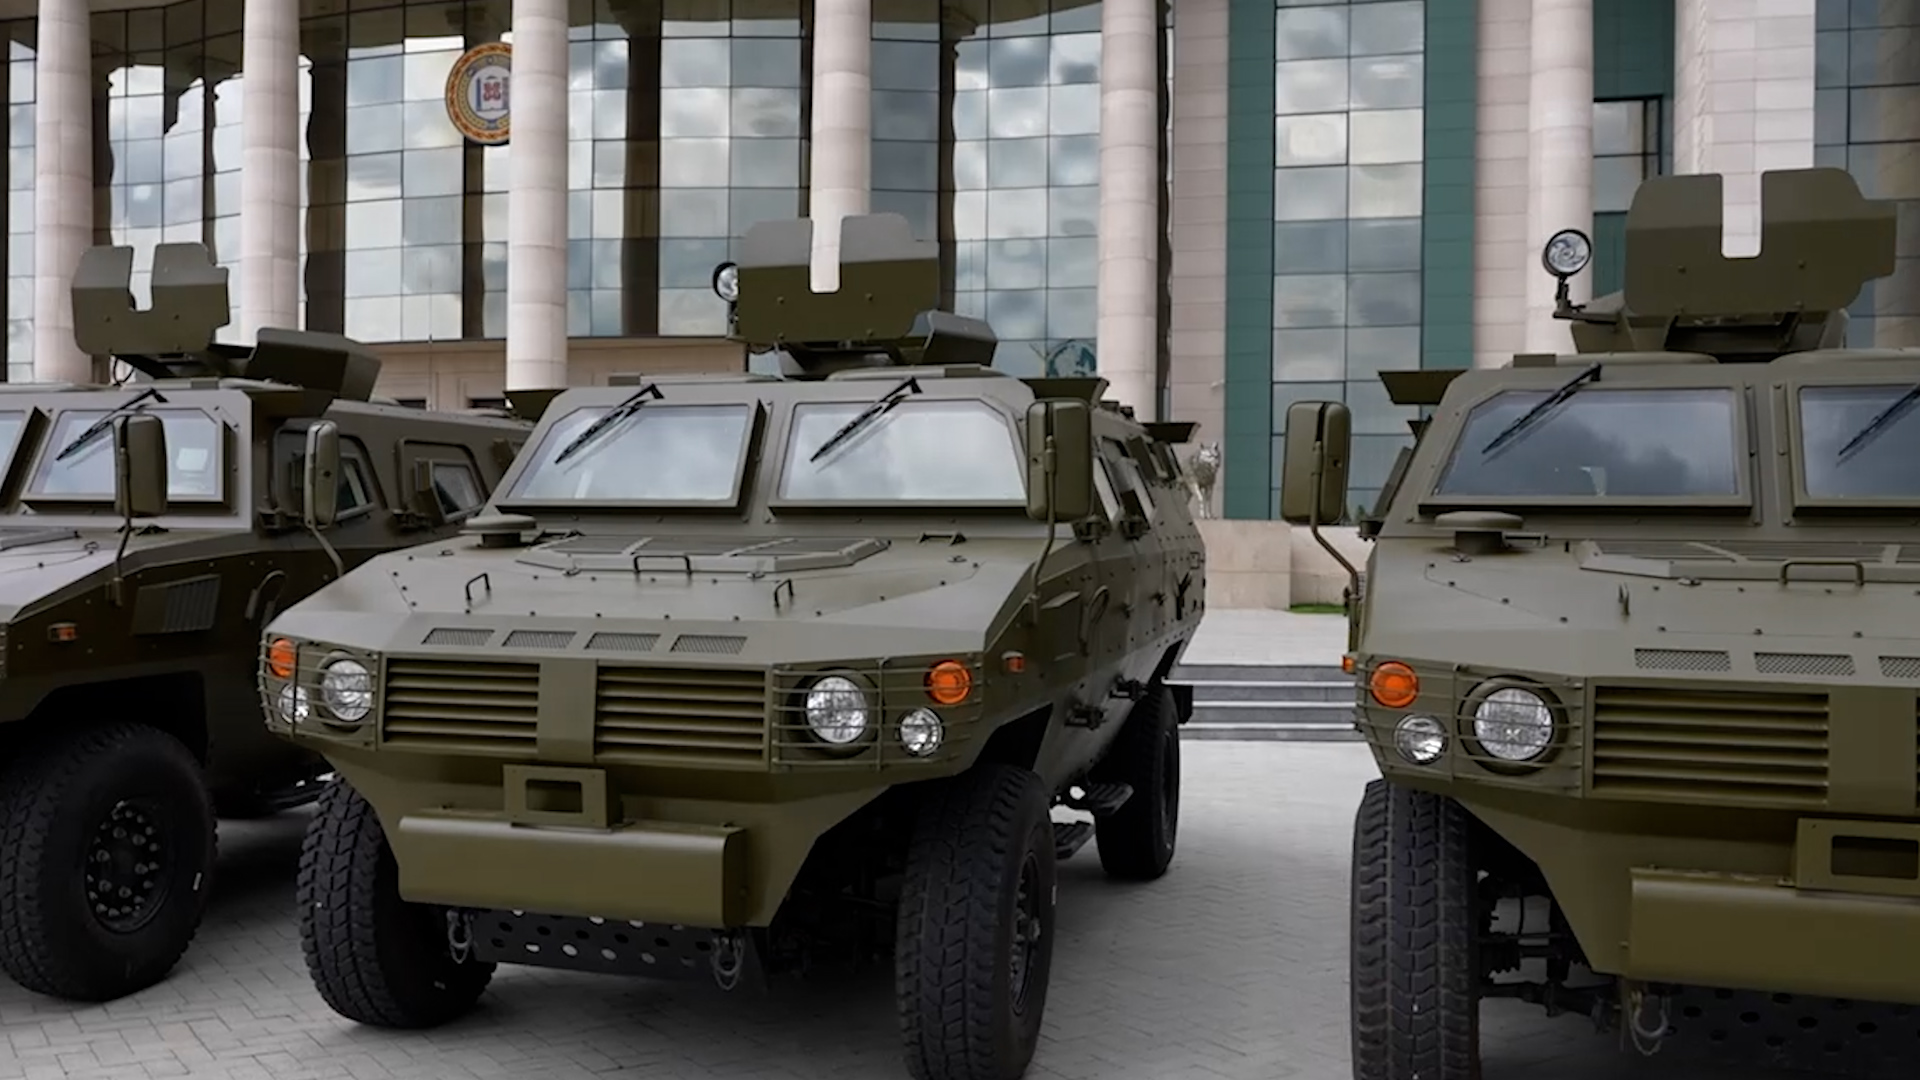 El jefe paramilitar checheno al servicio de Putin reveló que Rusia adquirió vehículos de guerra en China